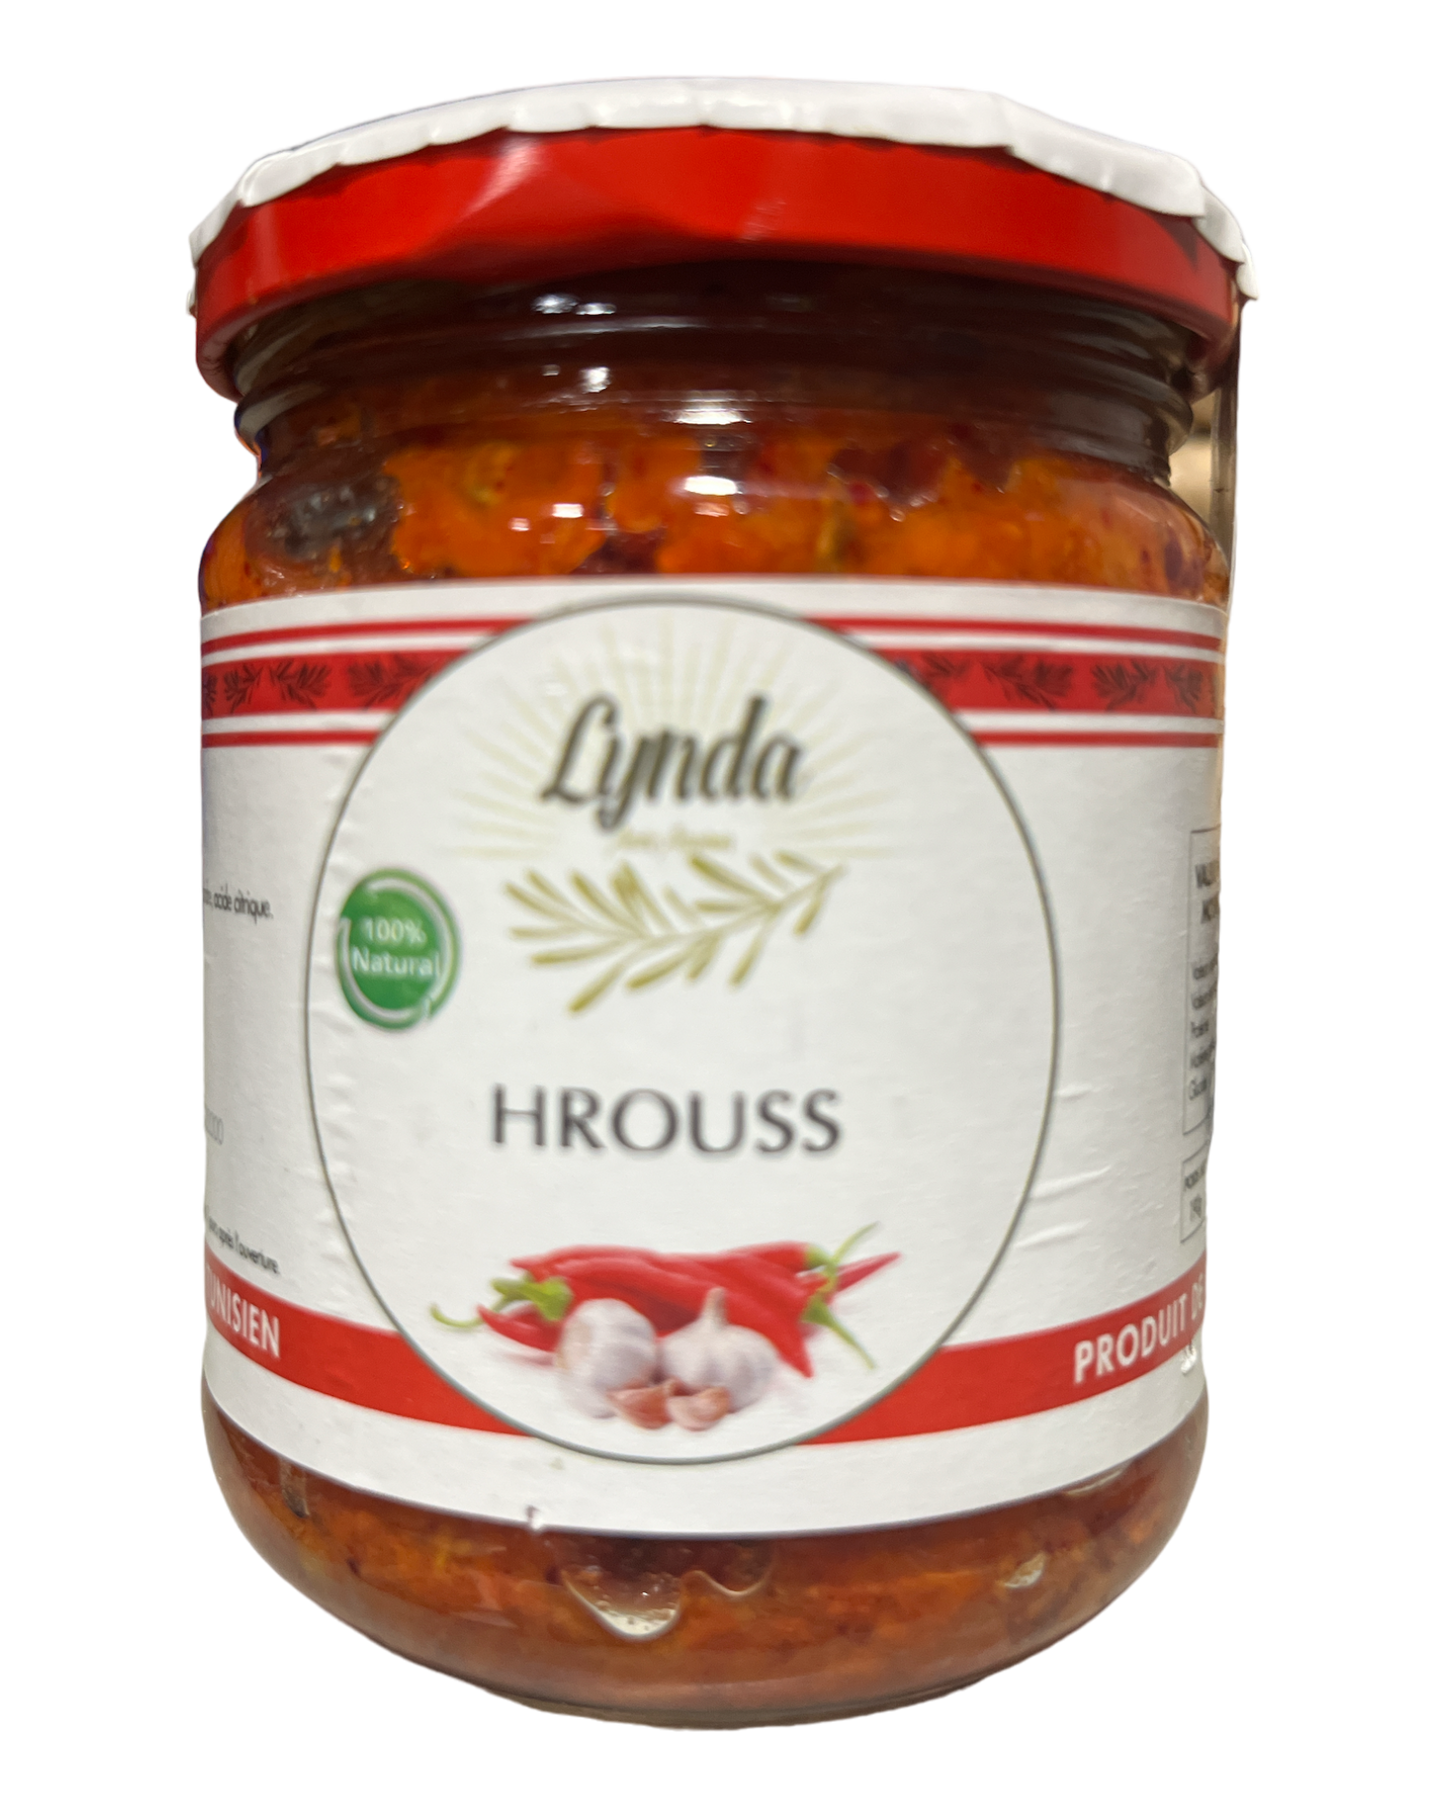 Tunisian Traditionnel Hrouss LYNDA 190g